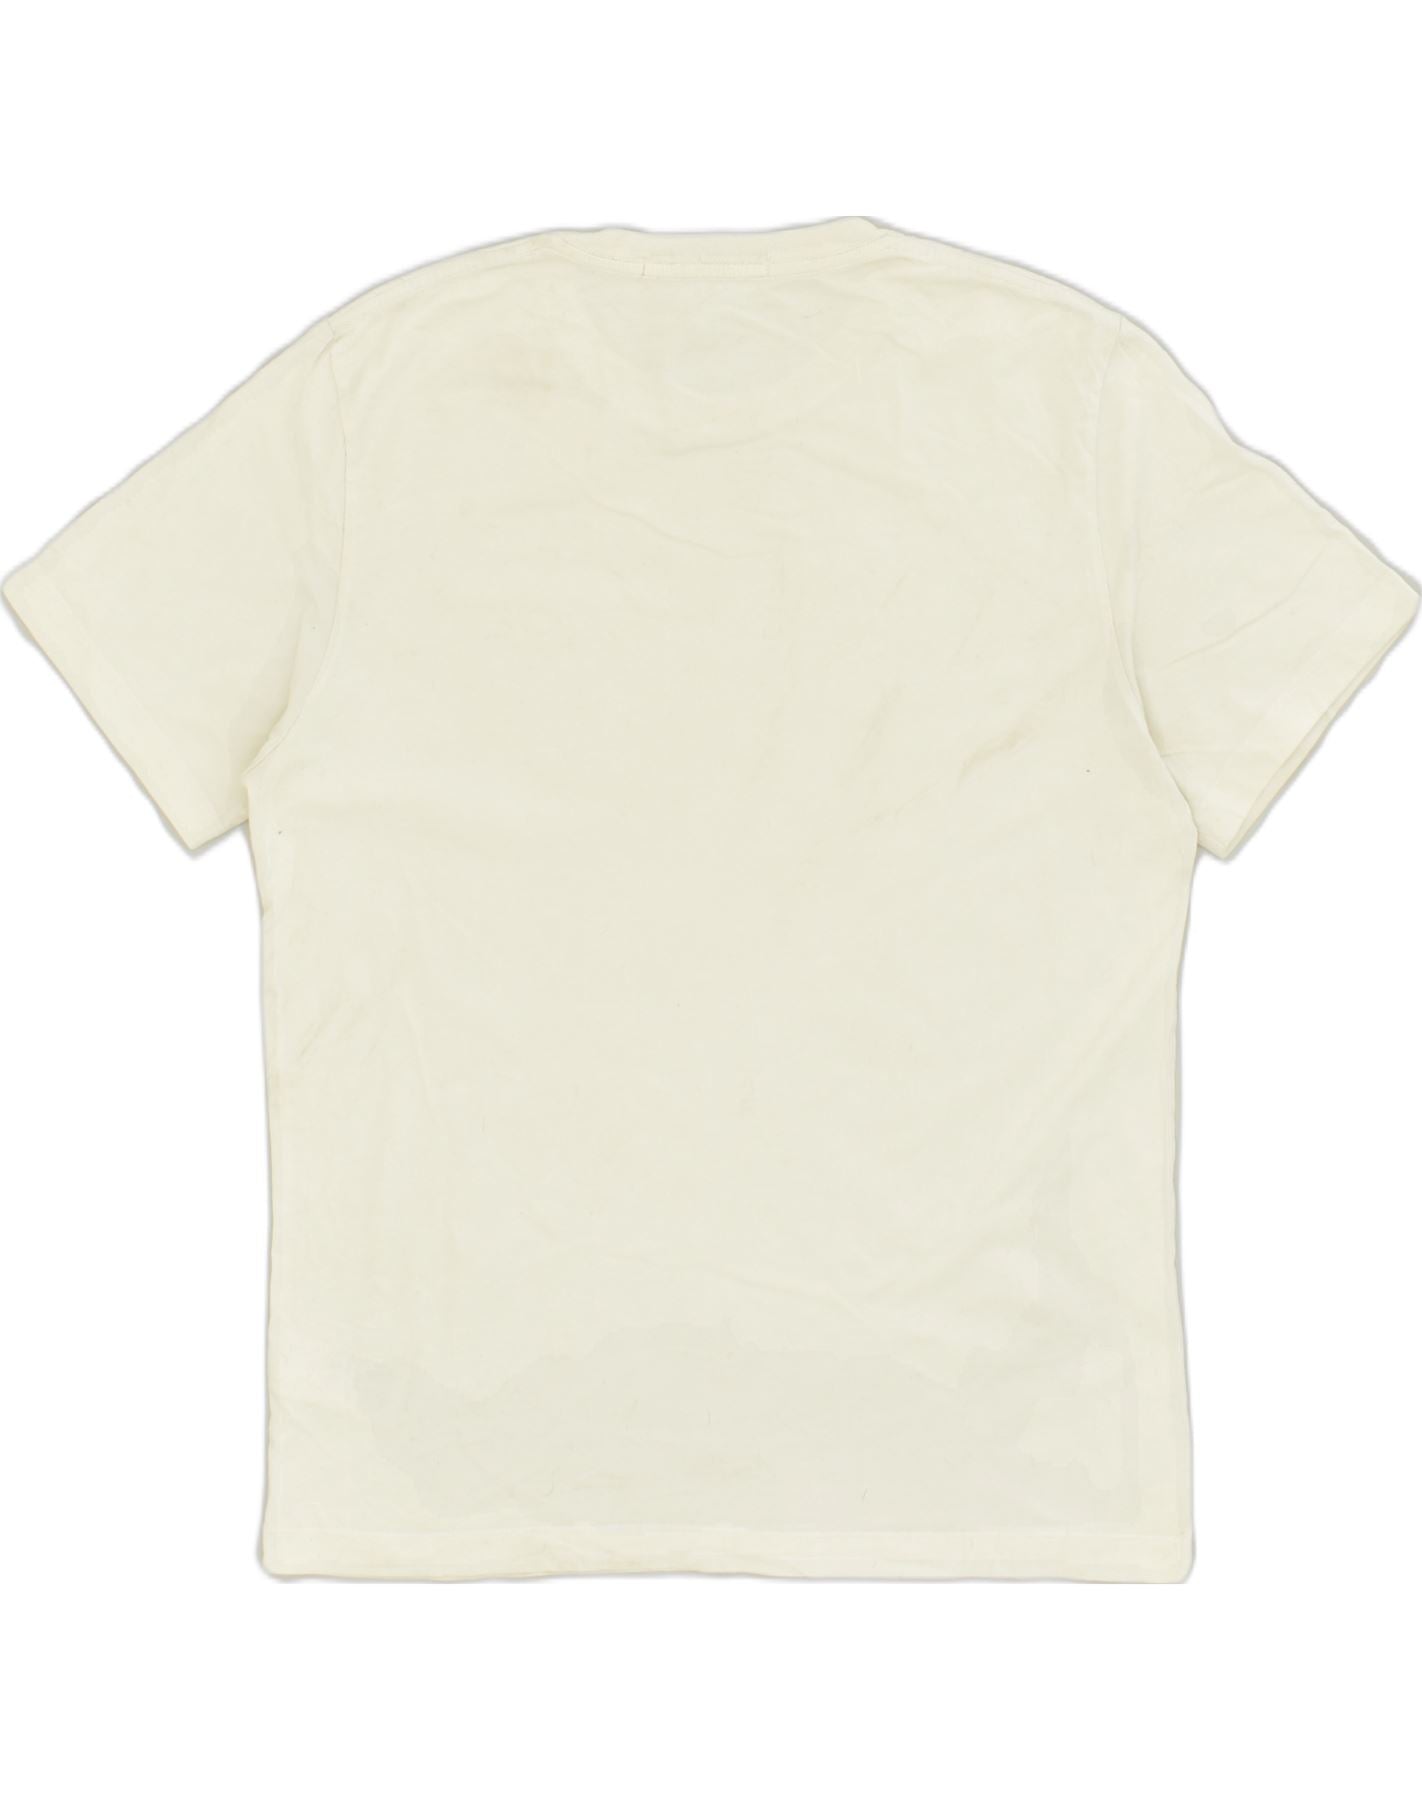 CALVIN KLEIN Womens T-Shirt Top UK 16 Large White Cotton